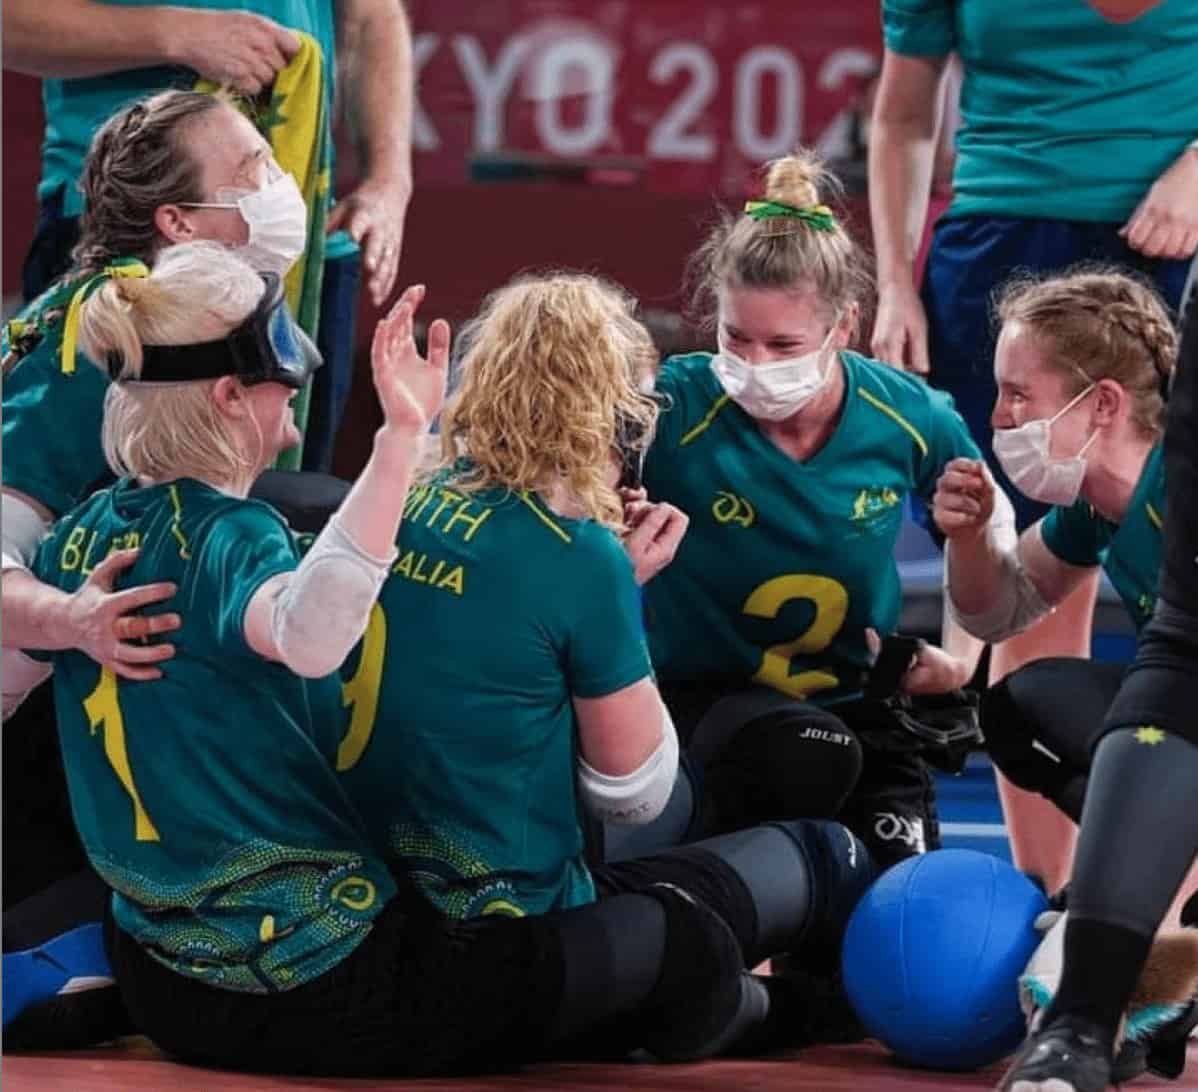 Australian women goalball team celebrating a win at the Paralympics.